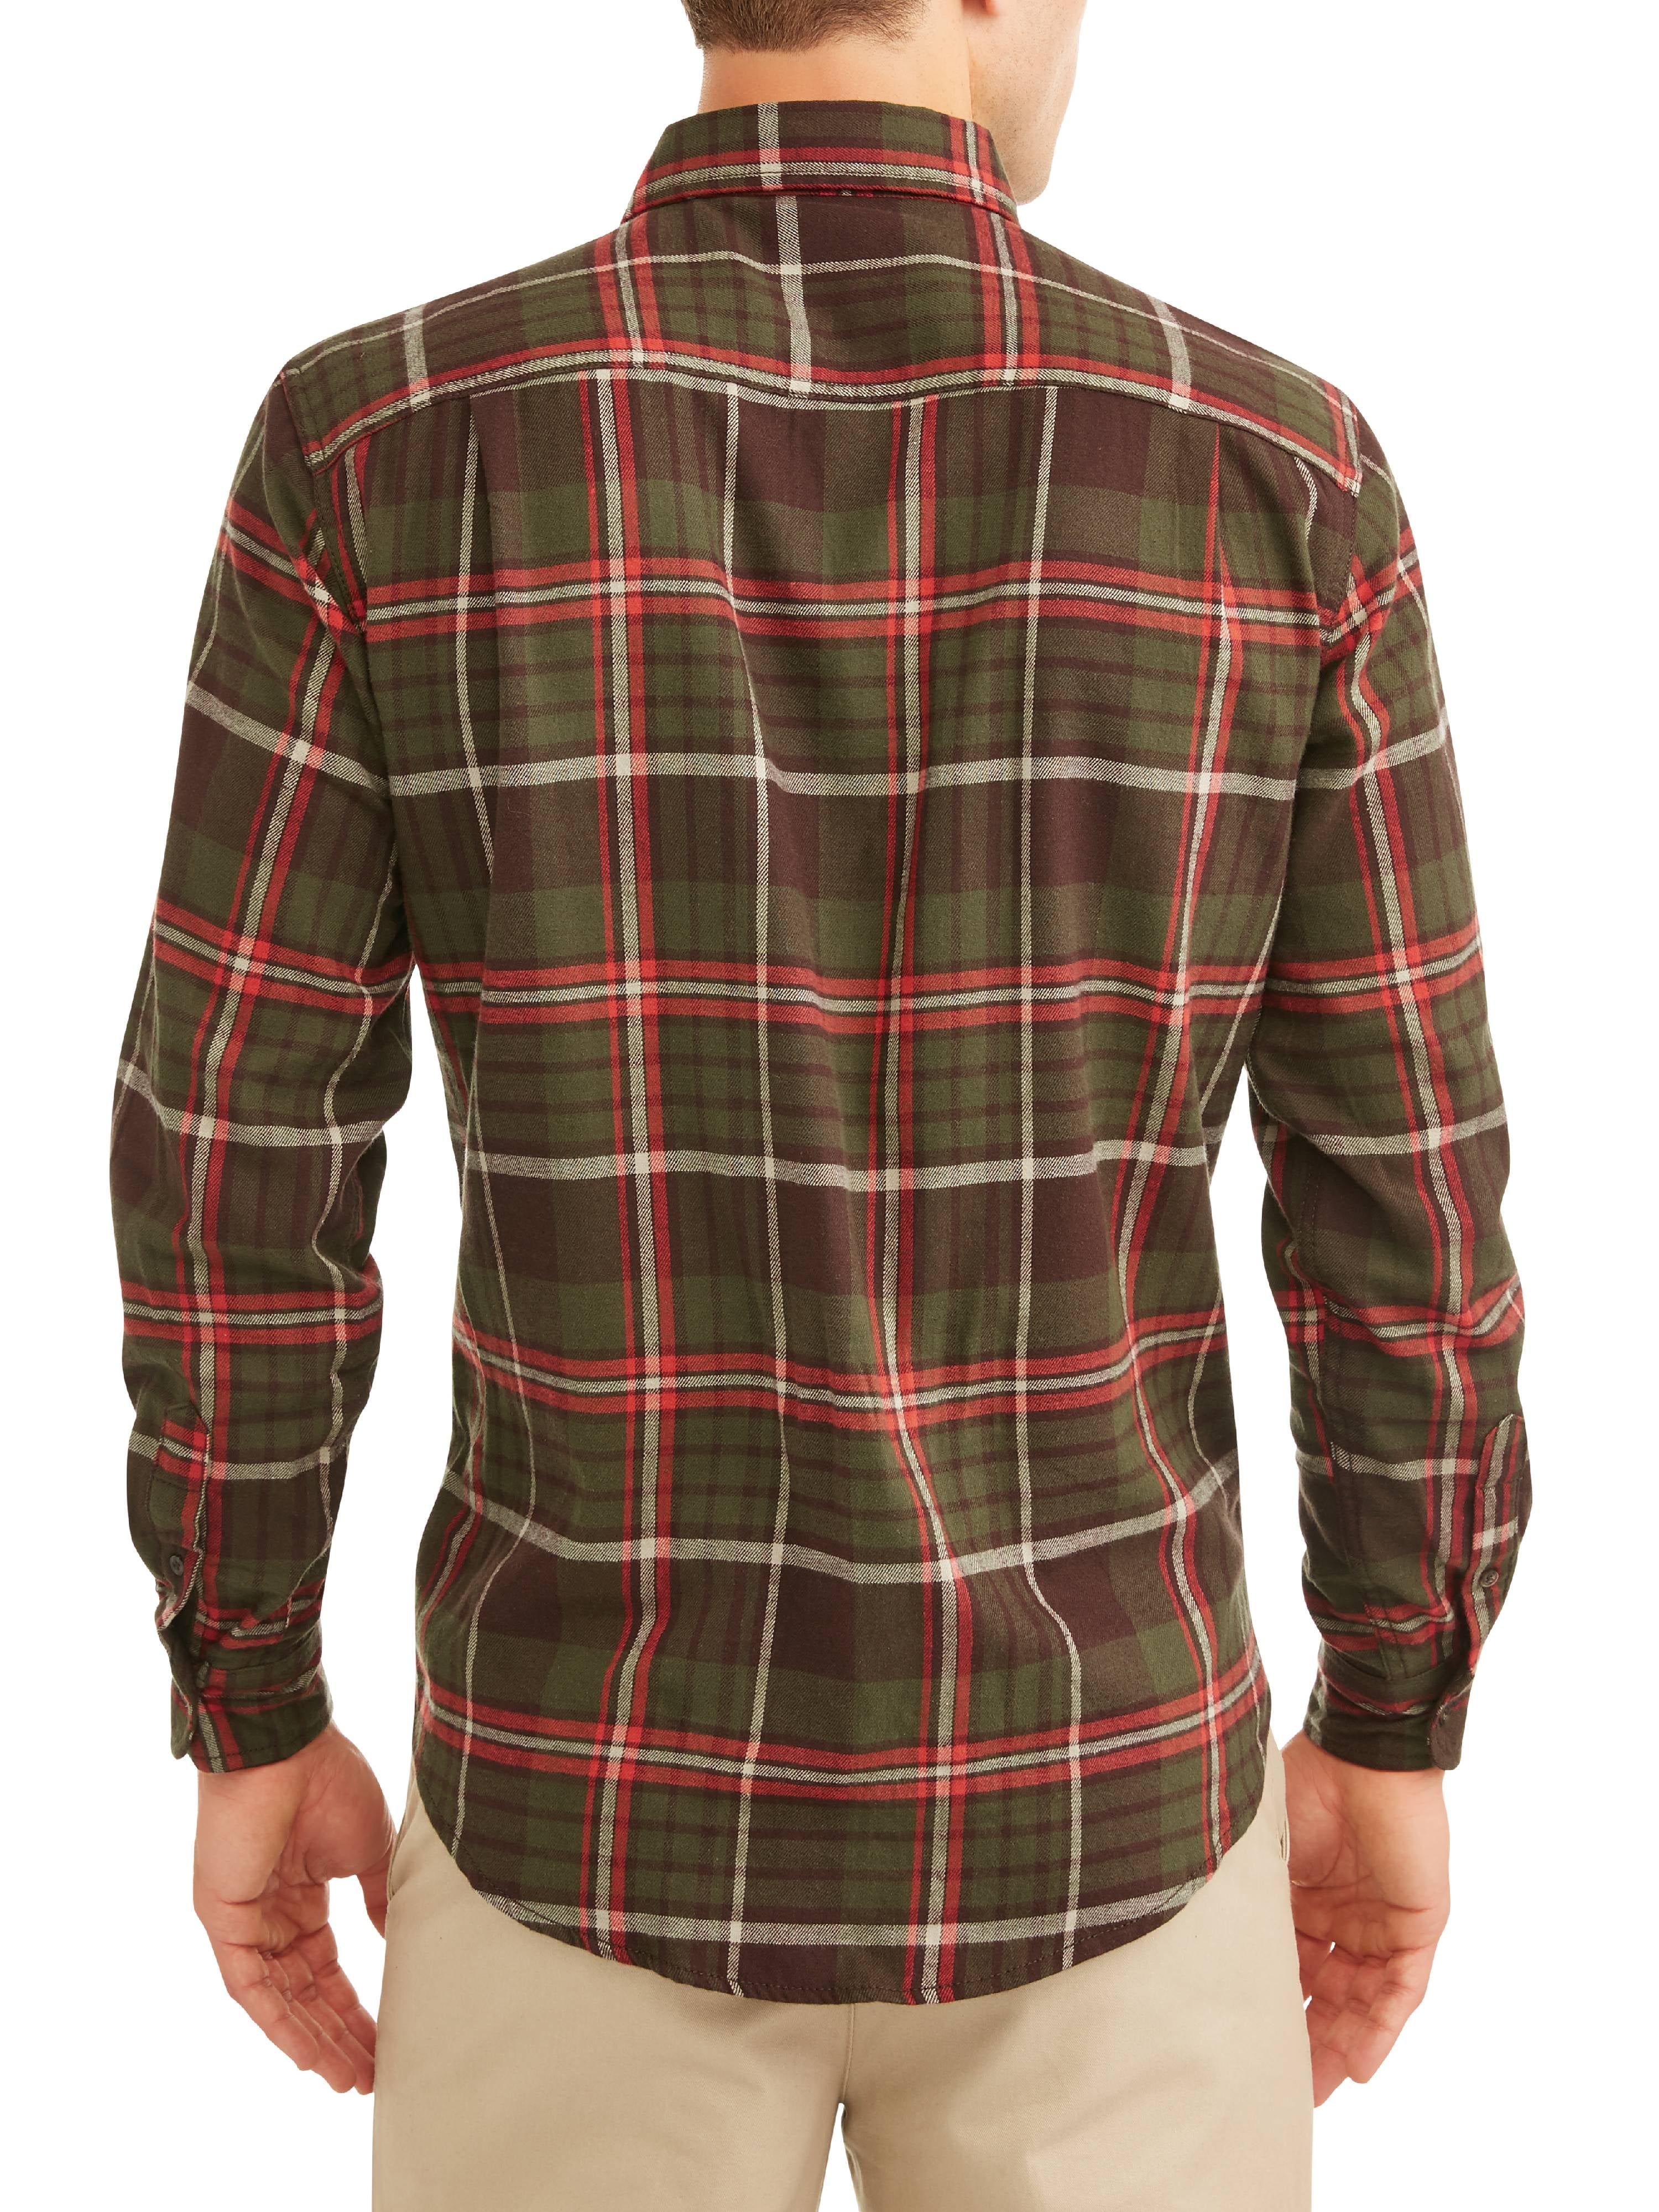 George - Men's Long Sleeve Flannel Shirt, Up To 5XL - Walmart.com